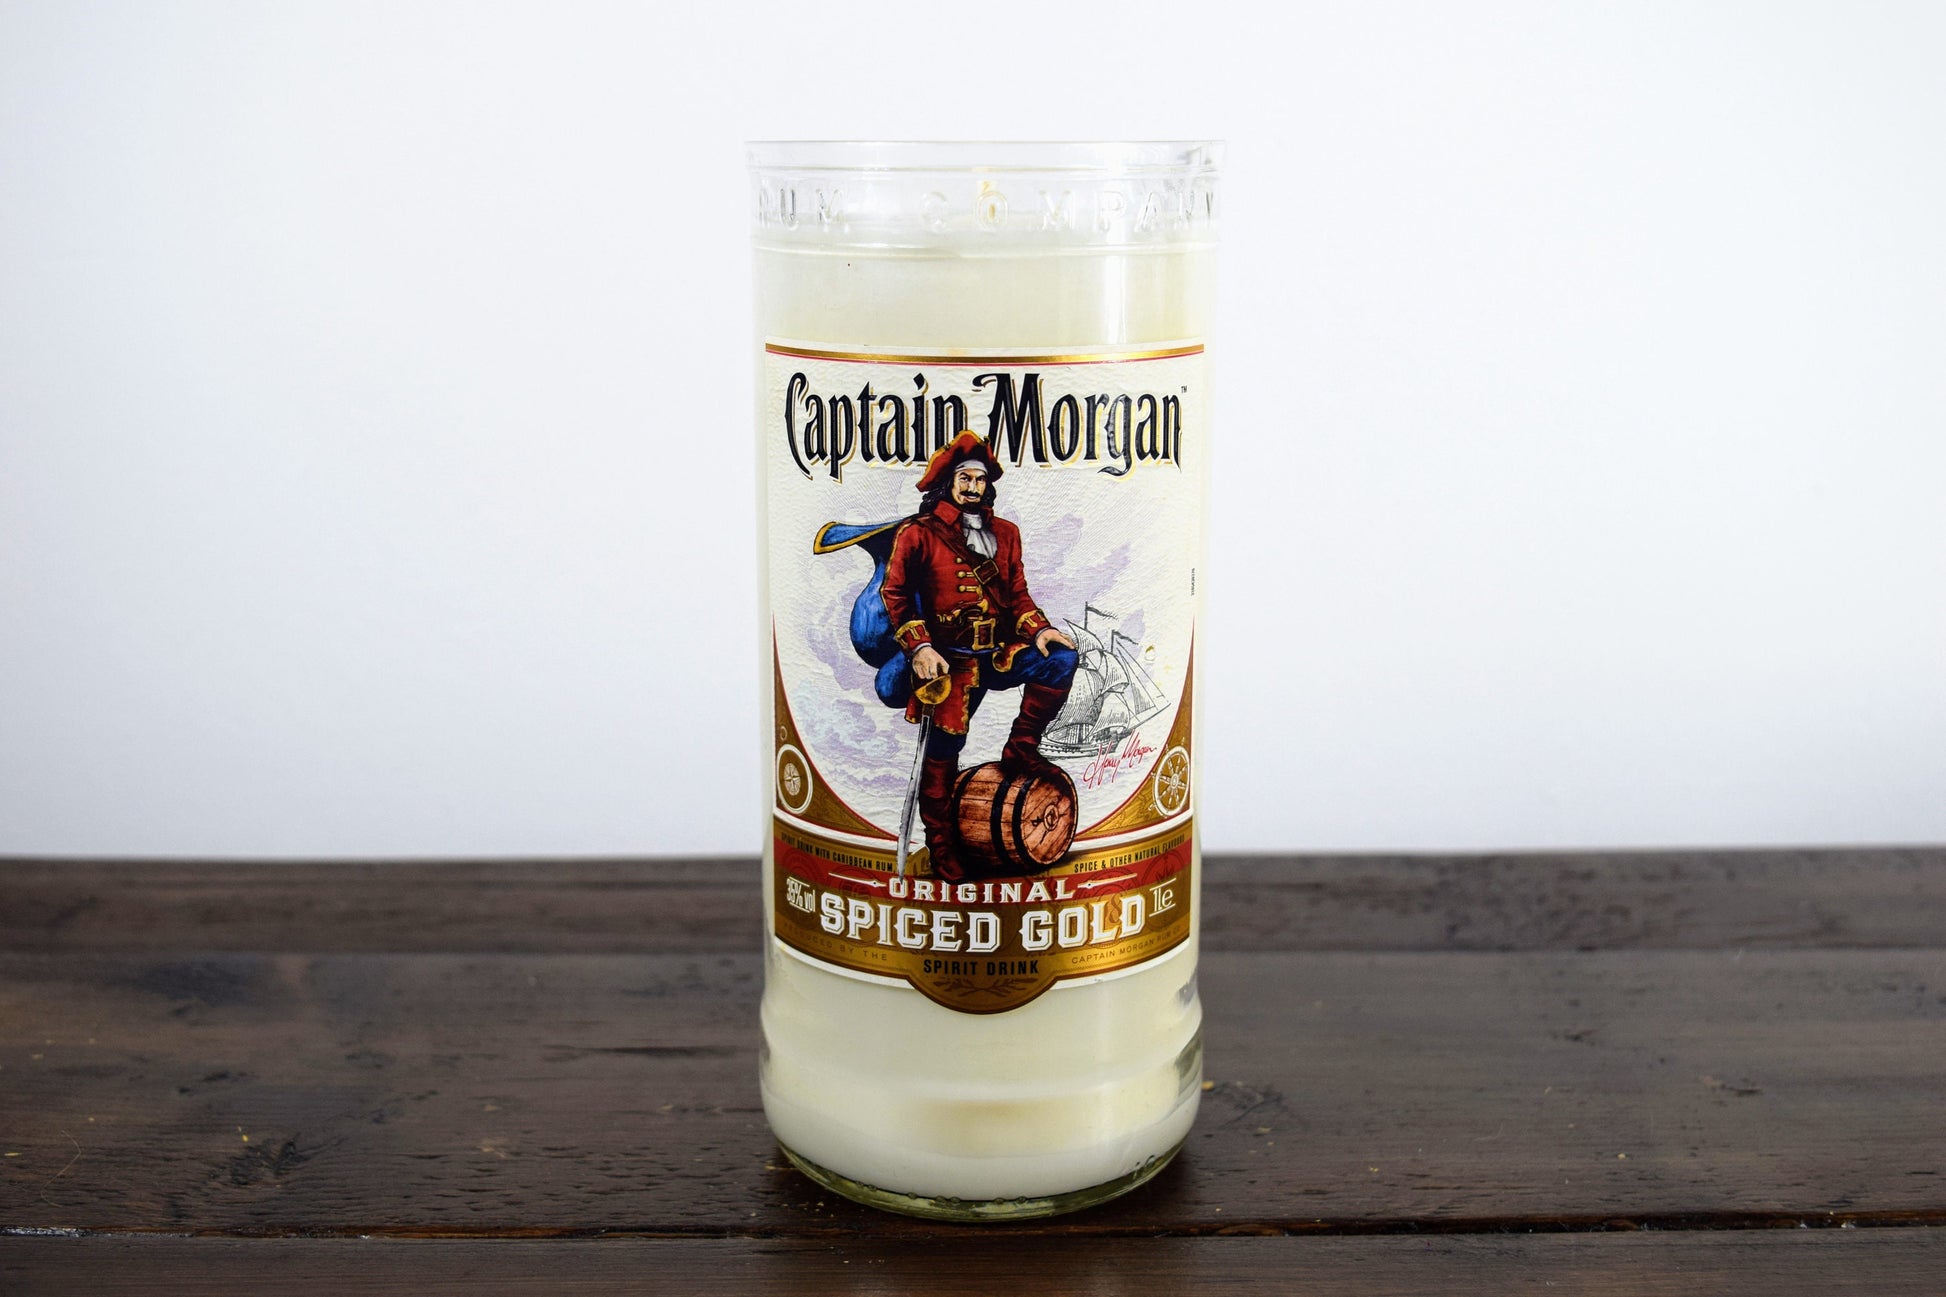 Captain Morgan 1L Spiced Gold Rum Bottle Candle Rum Bottle Candles Adhock Homeware